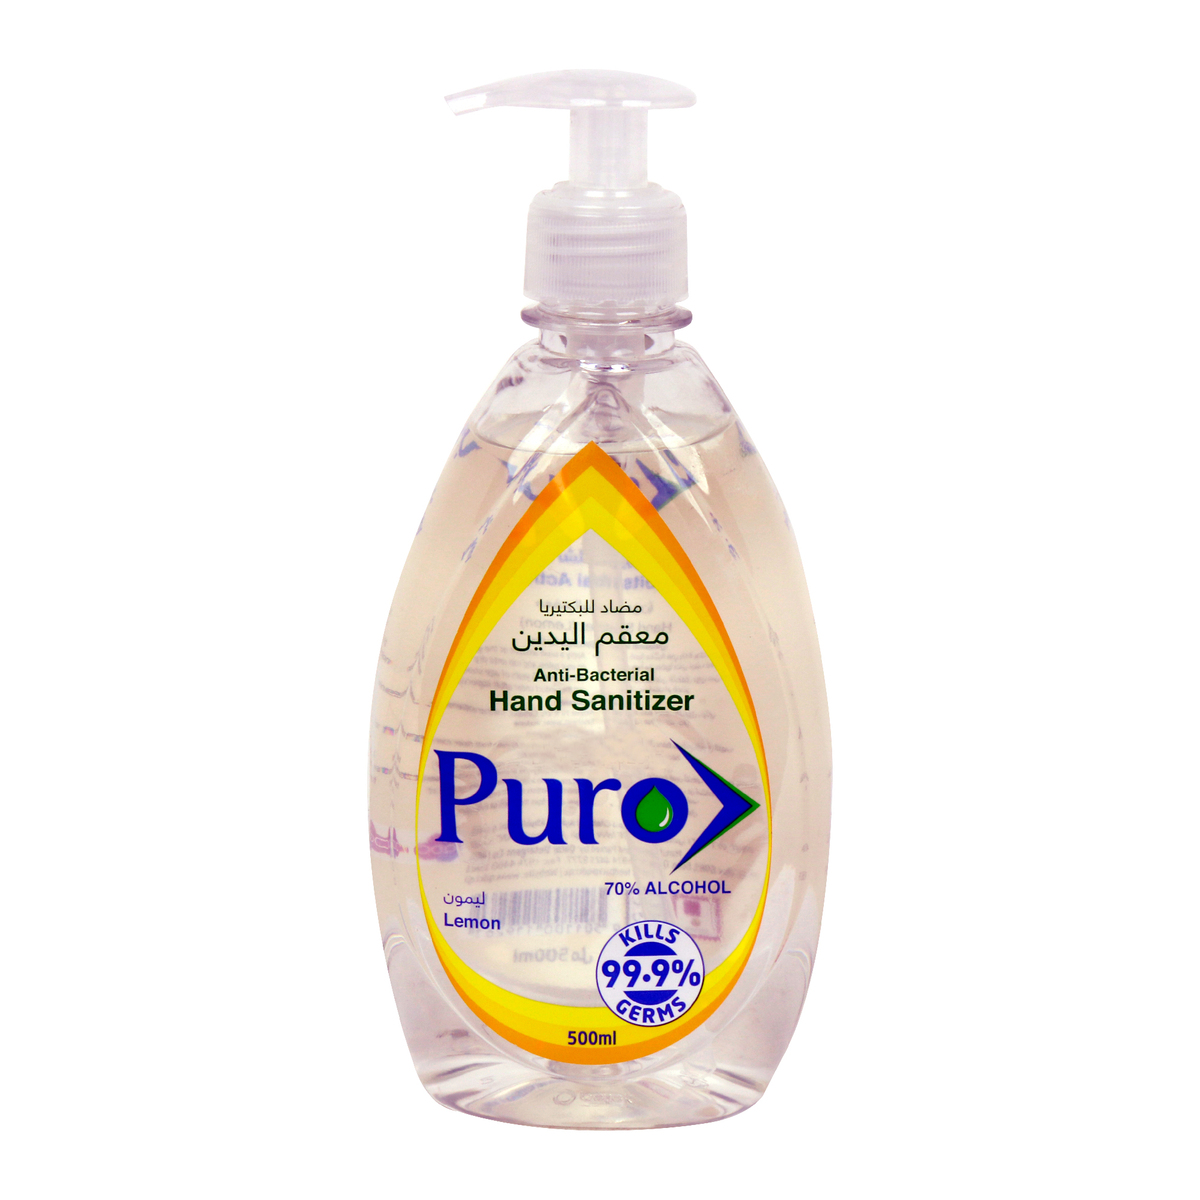 Puro Anti-Bacterial Hand Sanitizer Lemon 500ml